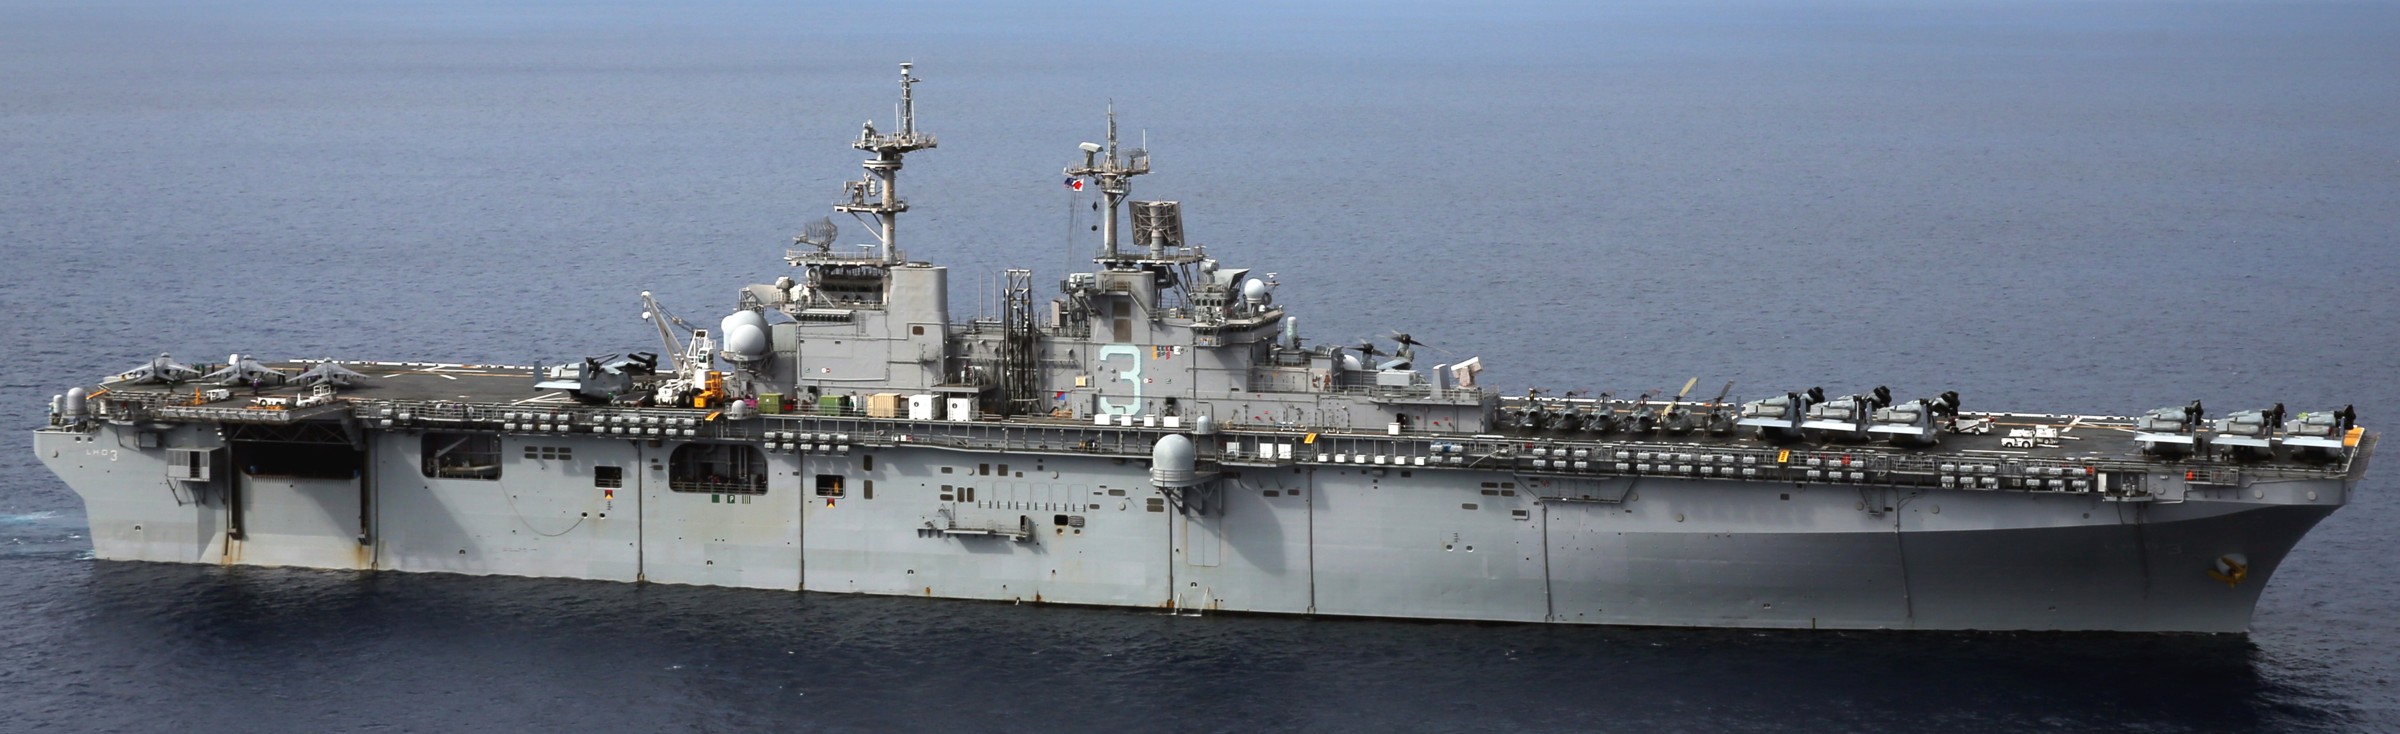 lhd-3 uss kearsarge wasp class amphibious assault ship us navy marines vmm-266 95